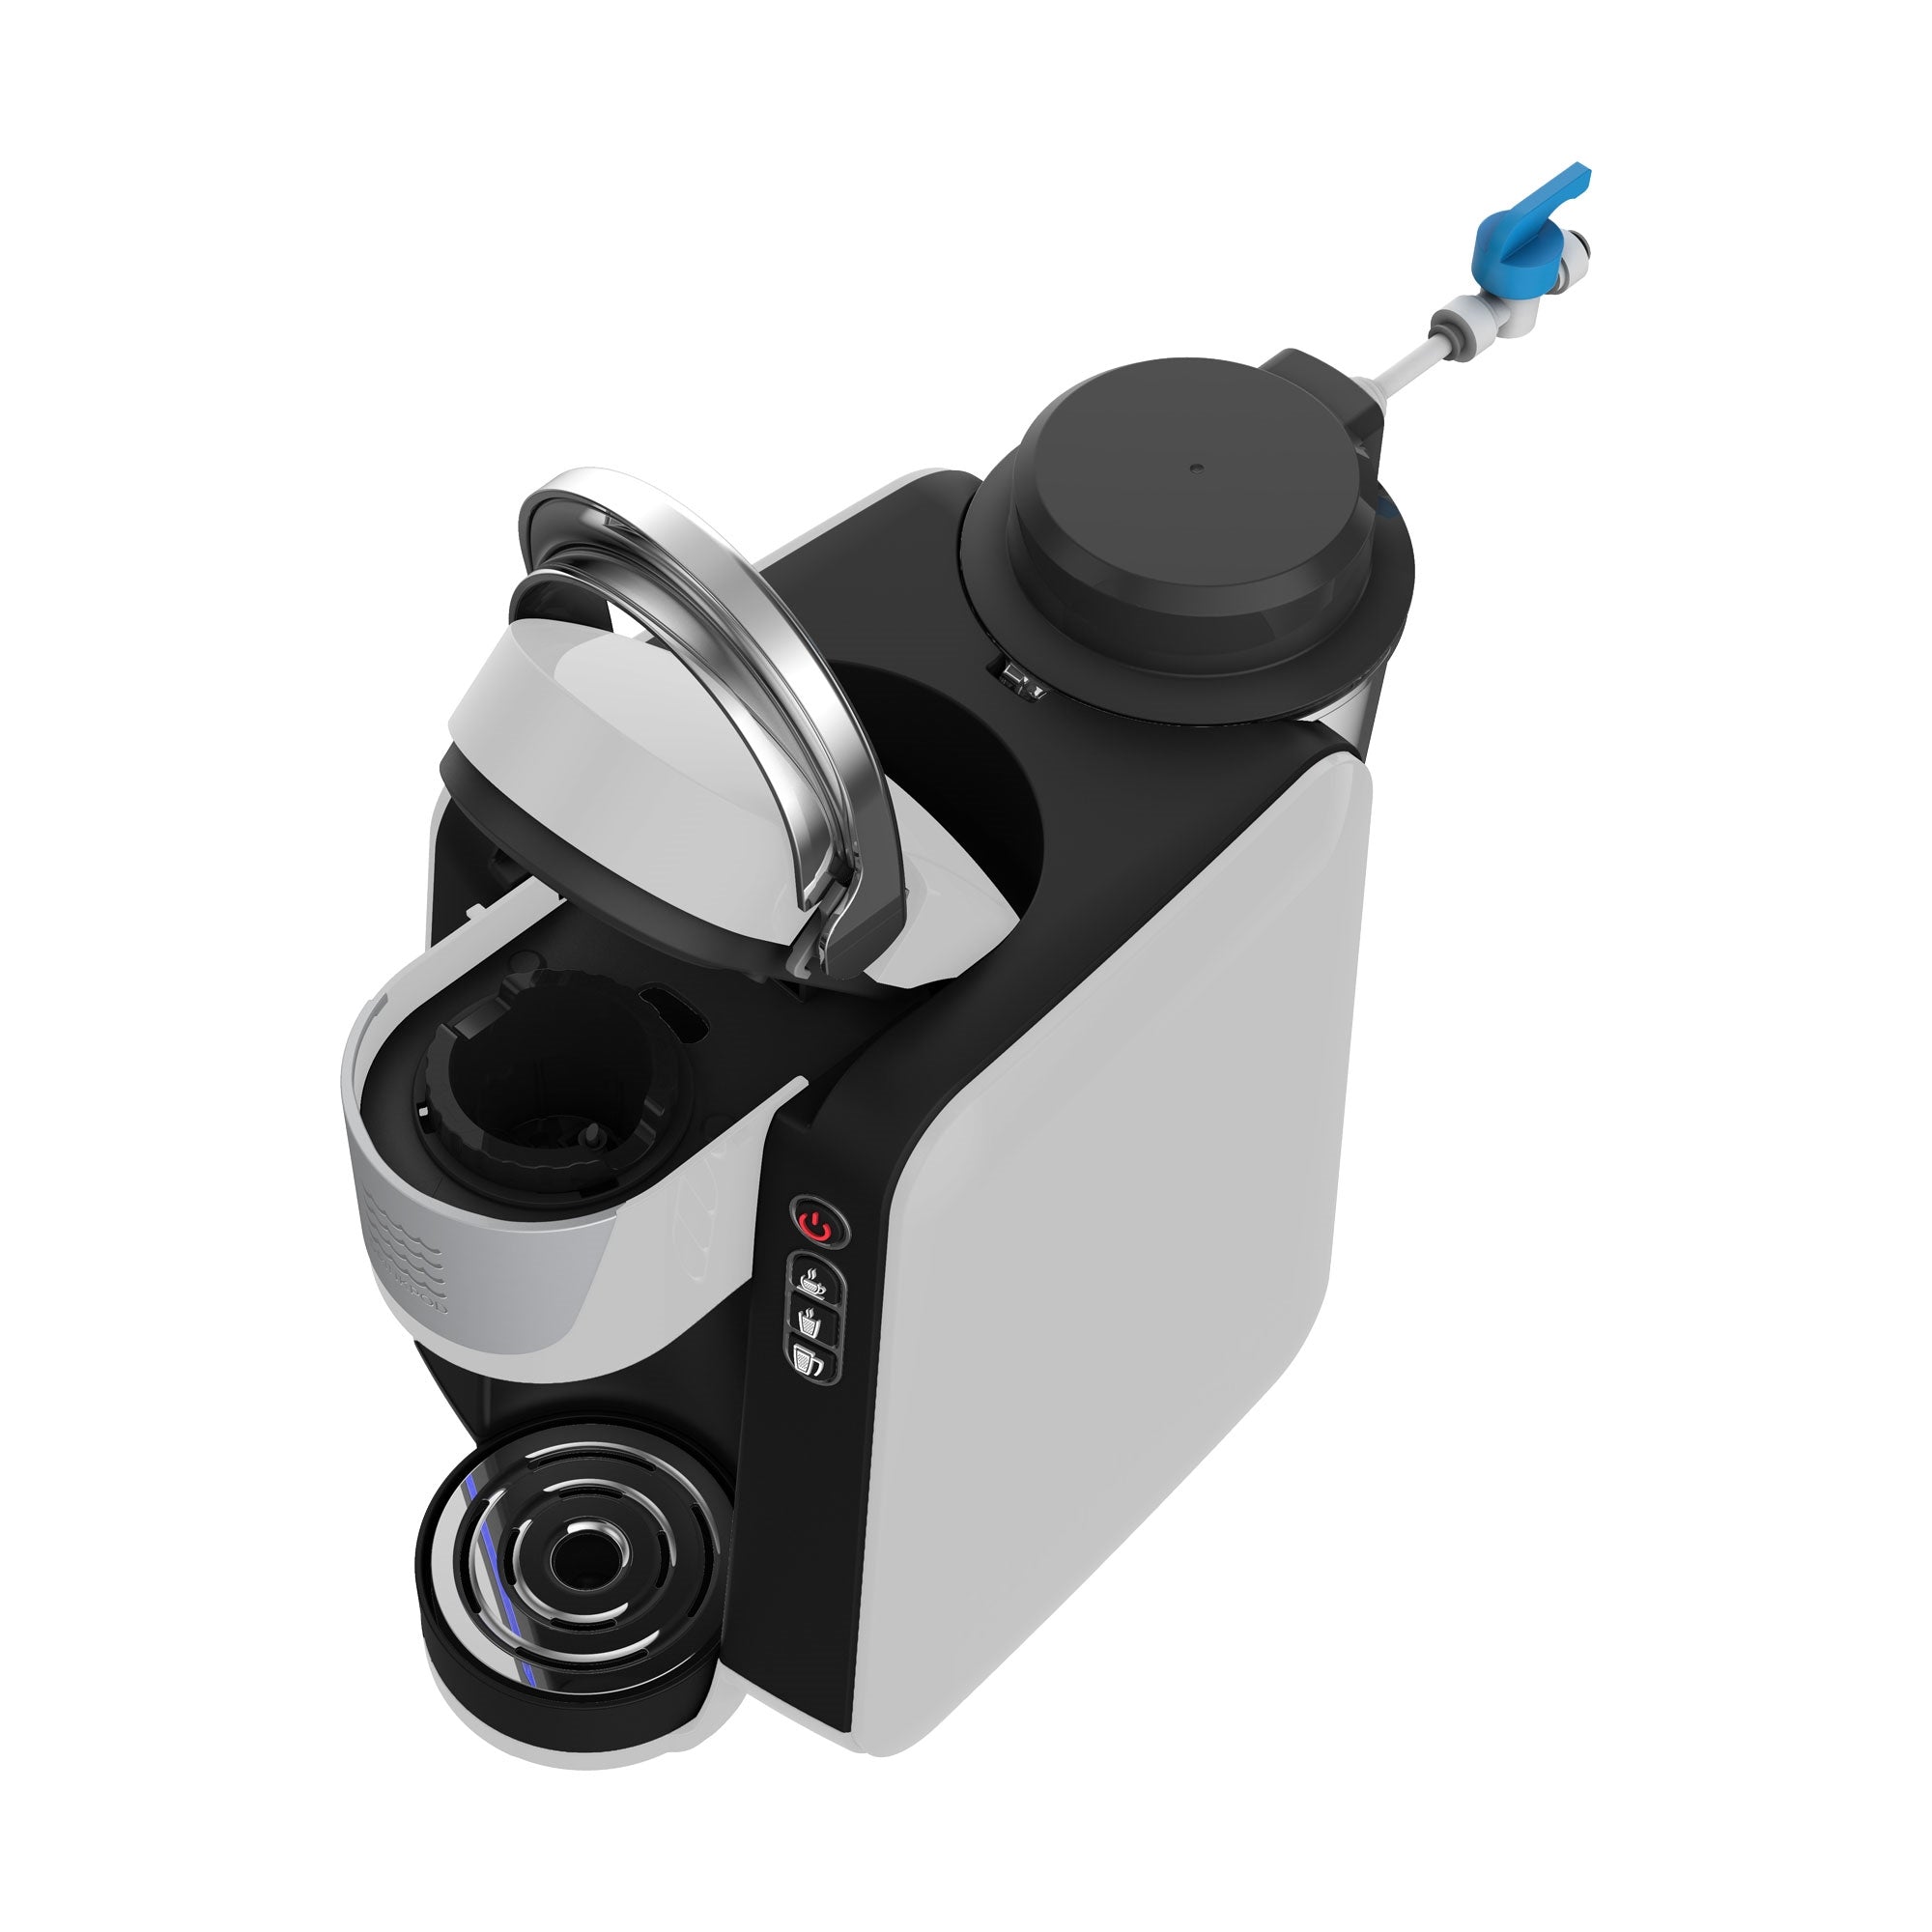 Portable Black ESPRESSO Machine- Premium - Drinkpod